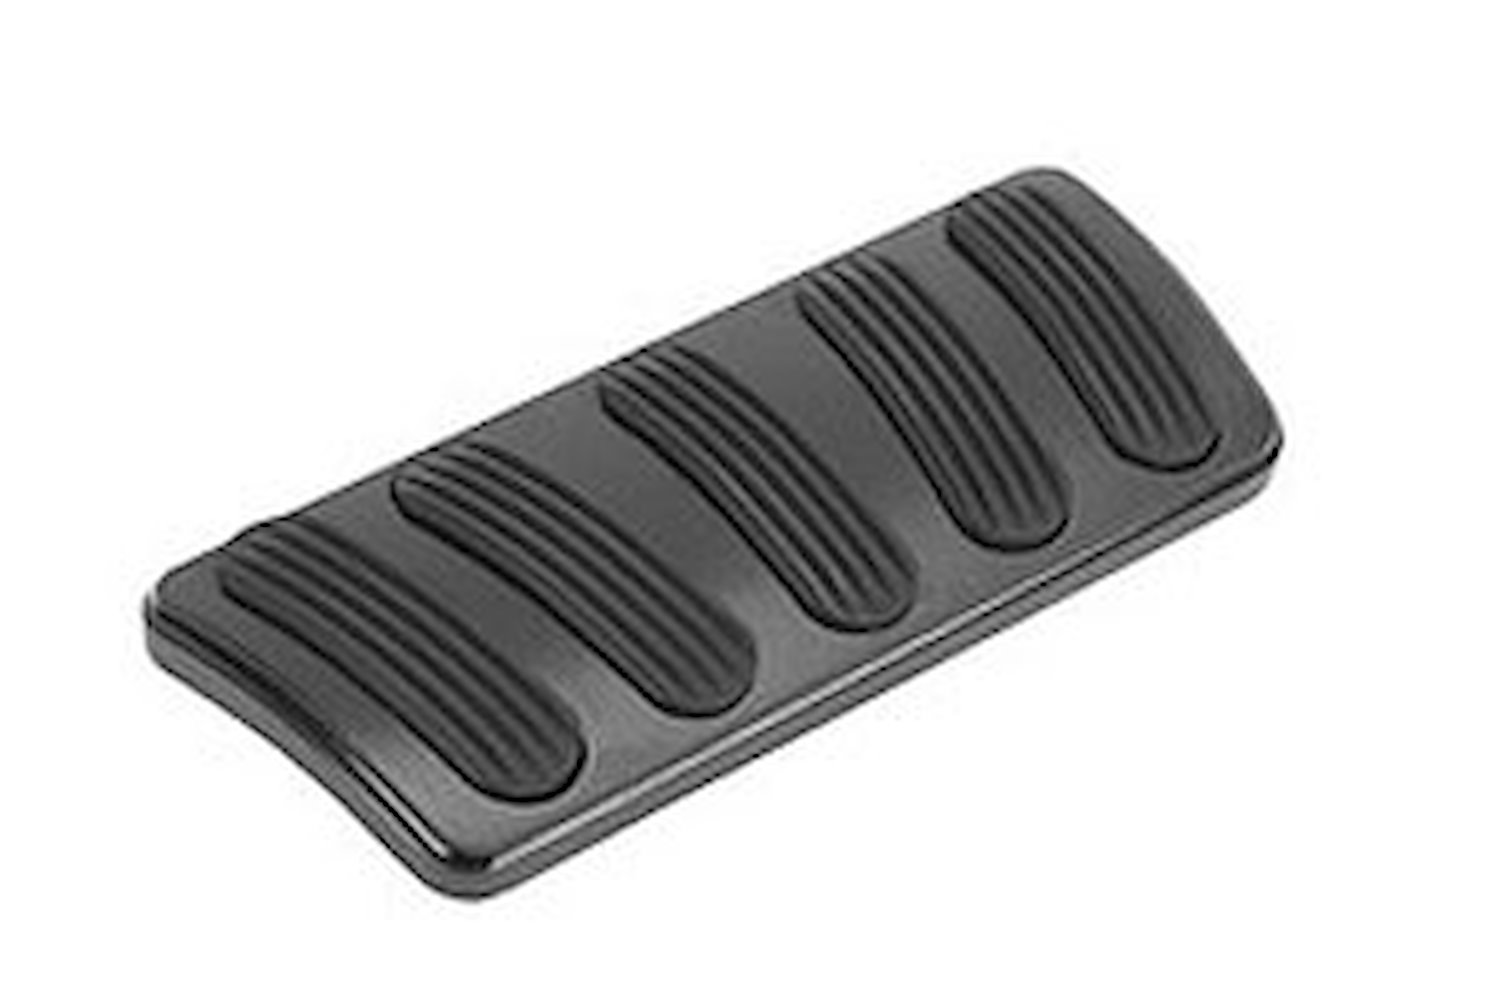 Billet Aluminum Curved Automatic Brake Pad Midnight Series Black w/Rubber Insert